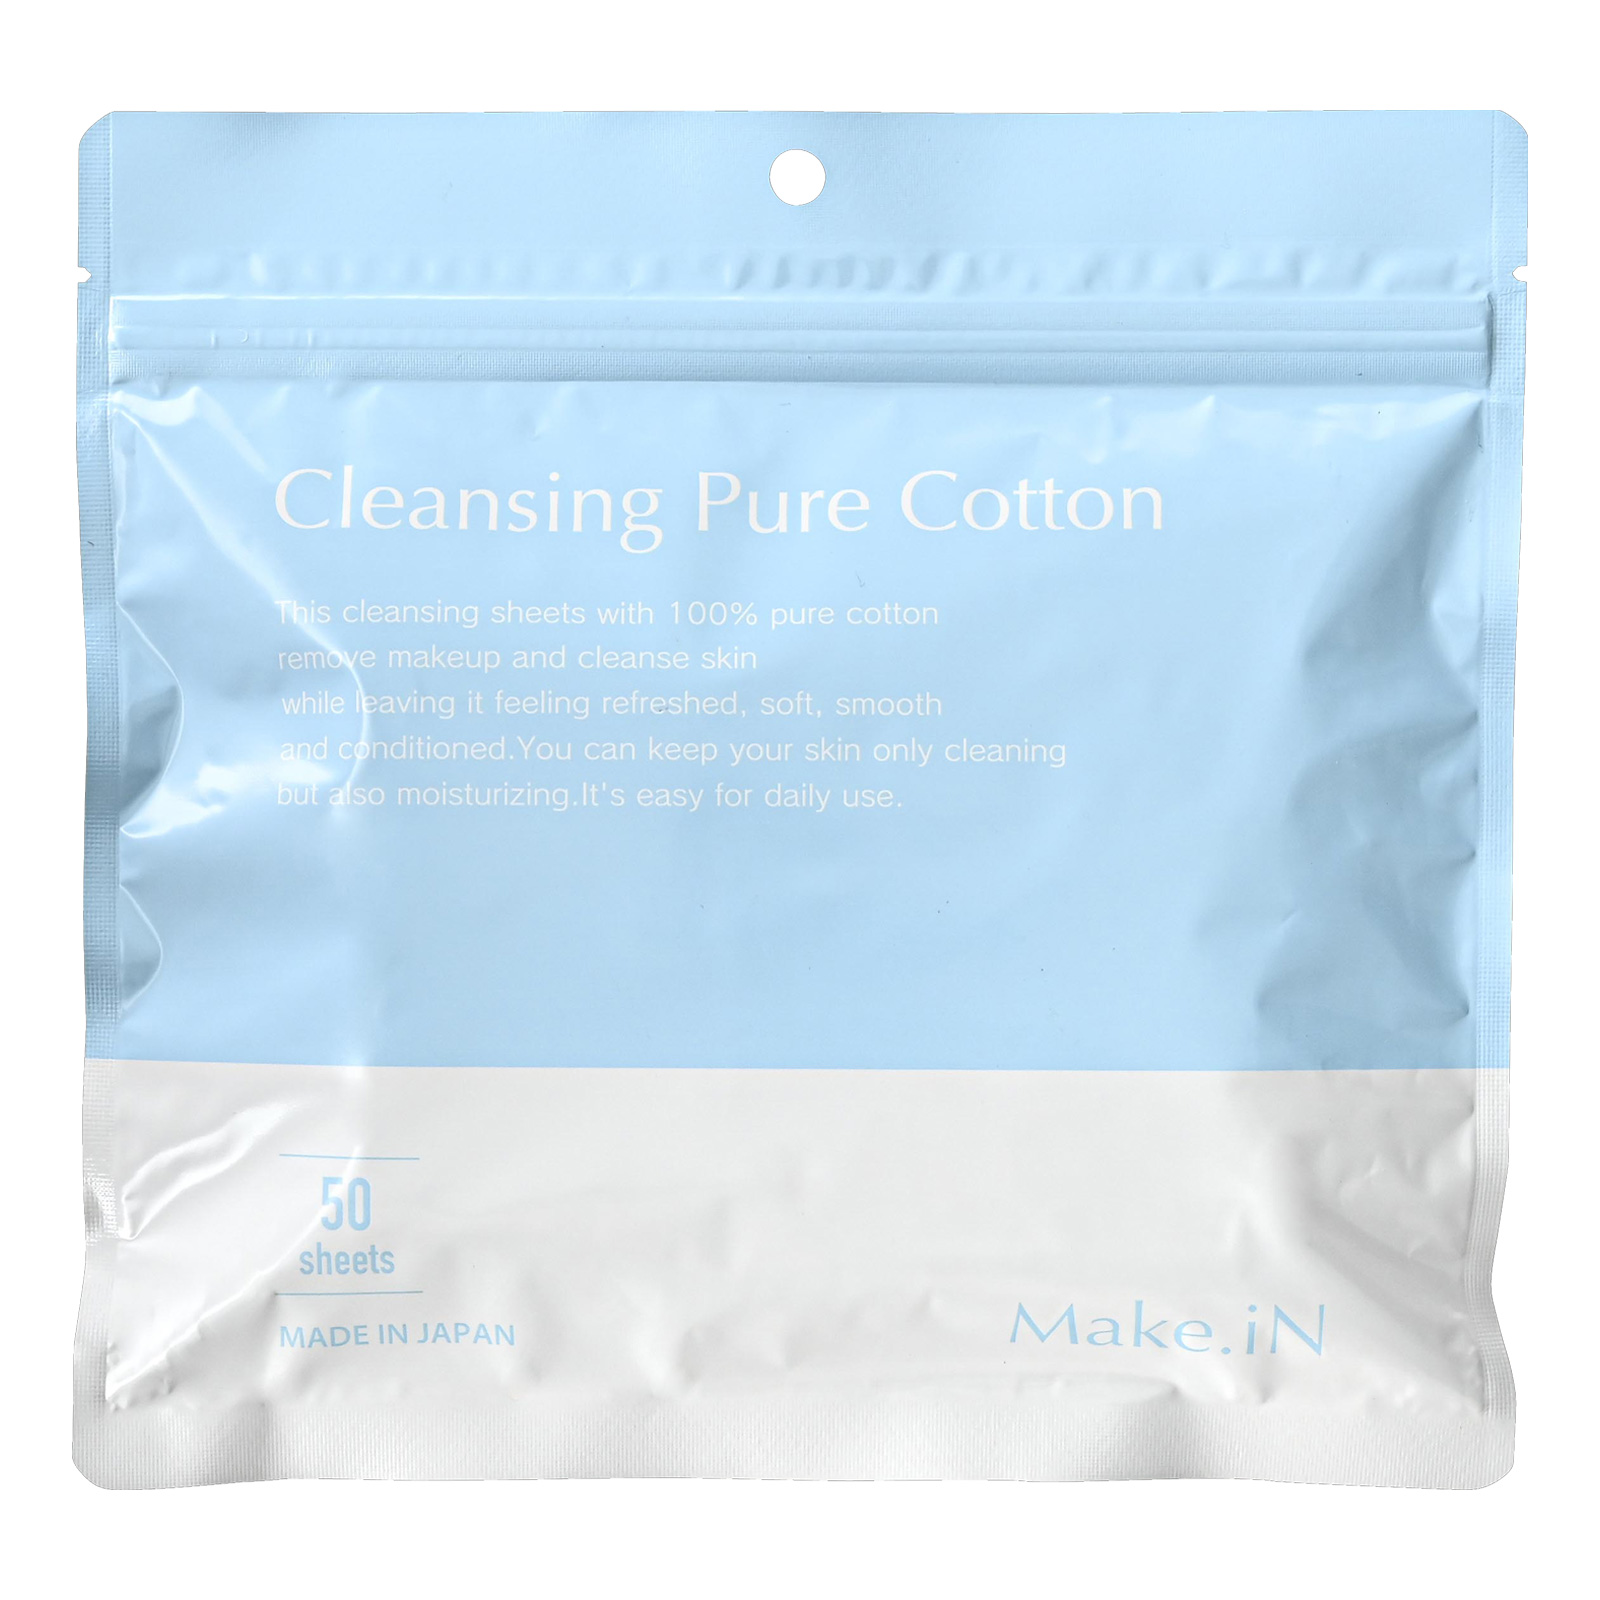 Make.iN Cleansing Pure Cotton. Очищающие салфетки для кожи лица Мейк.иН, 50 шт. (350 мл)